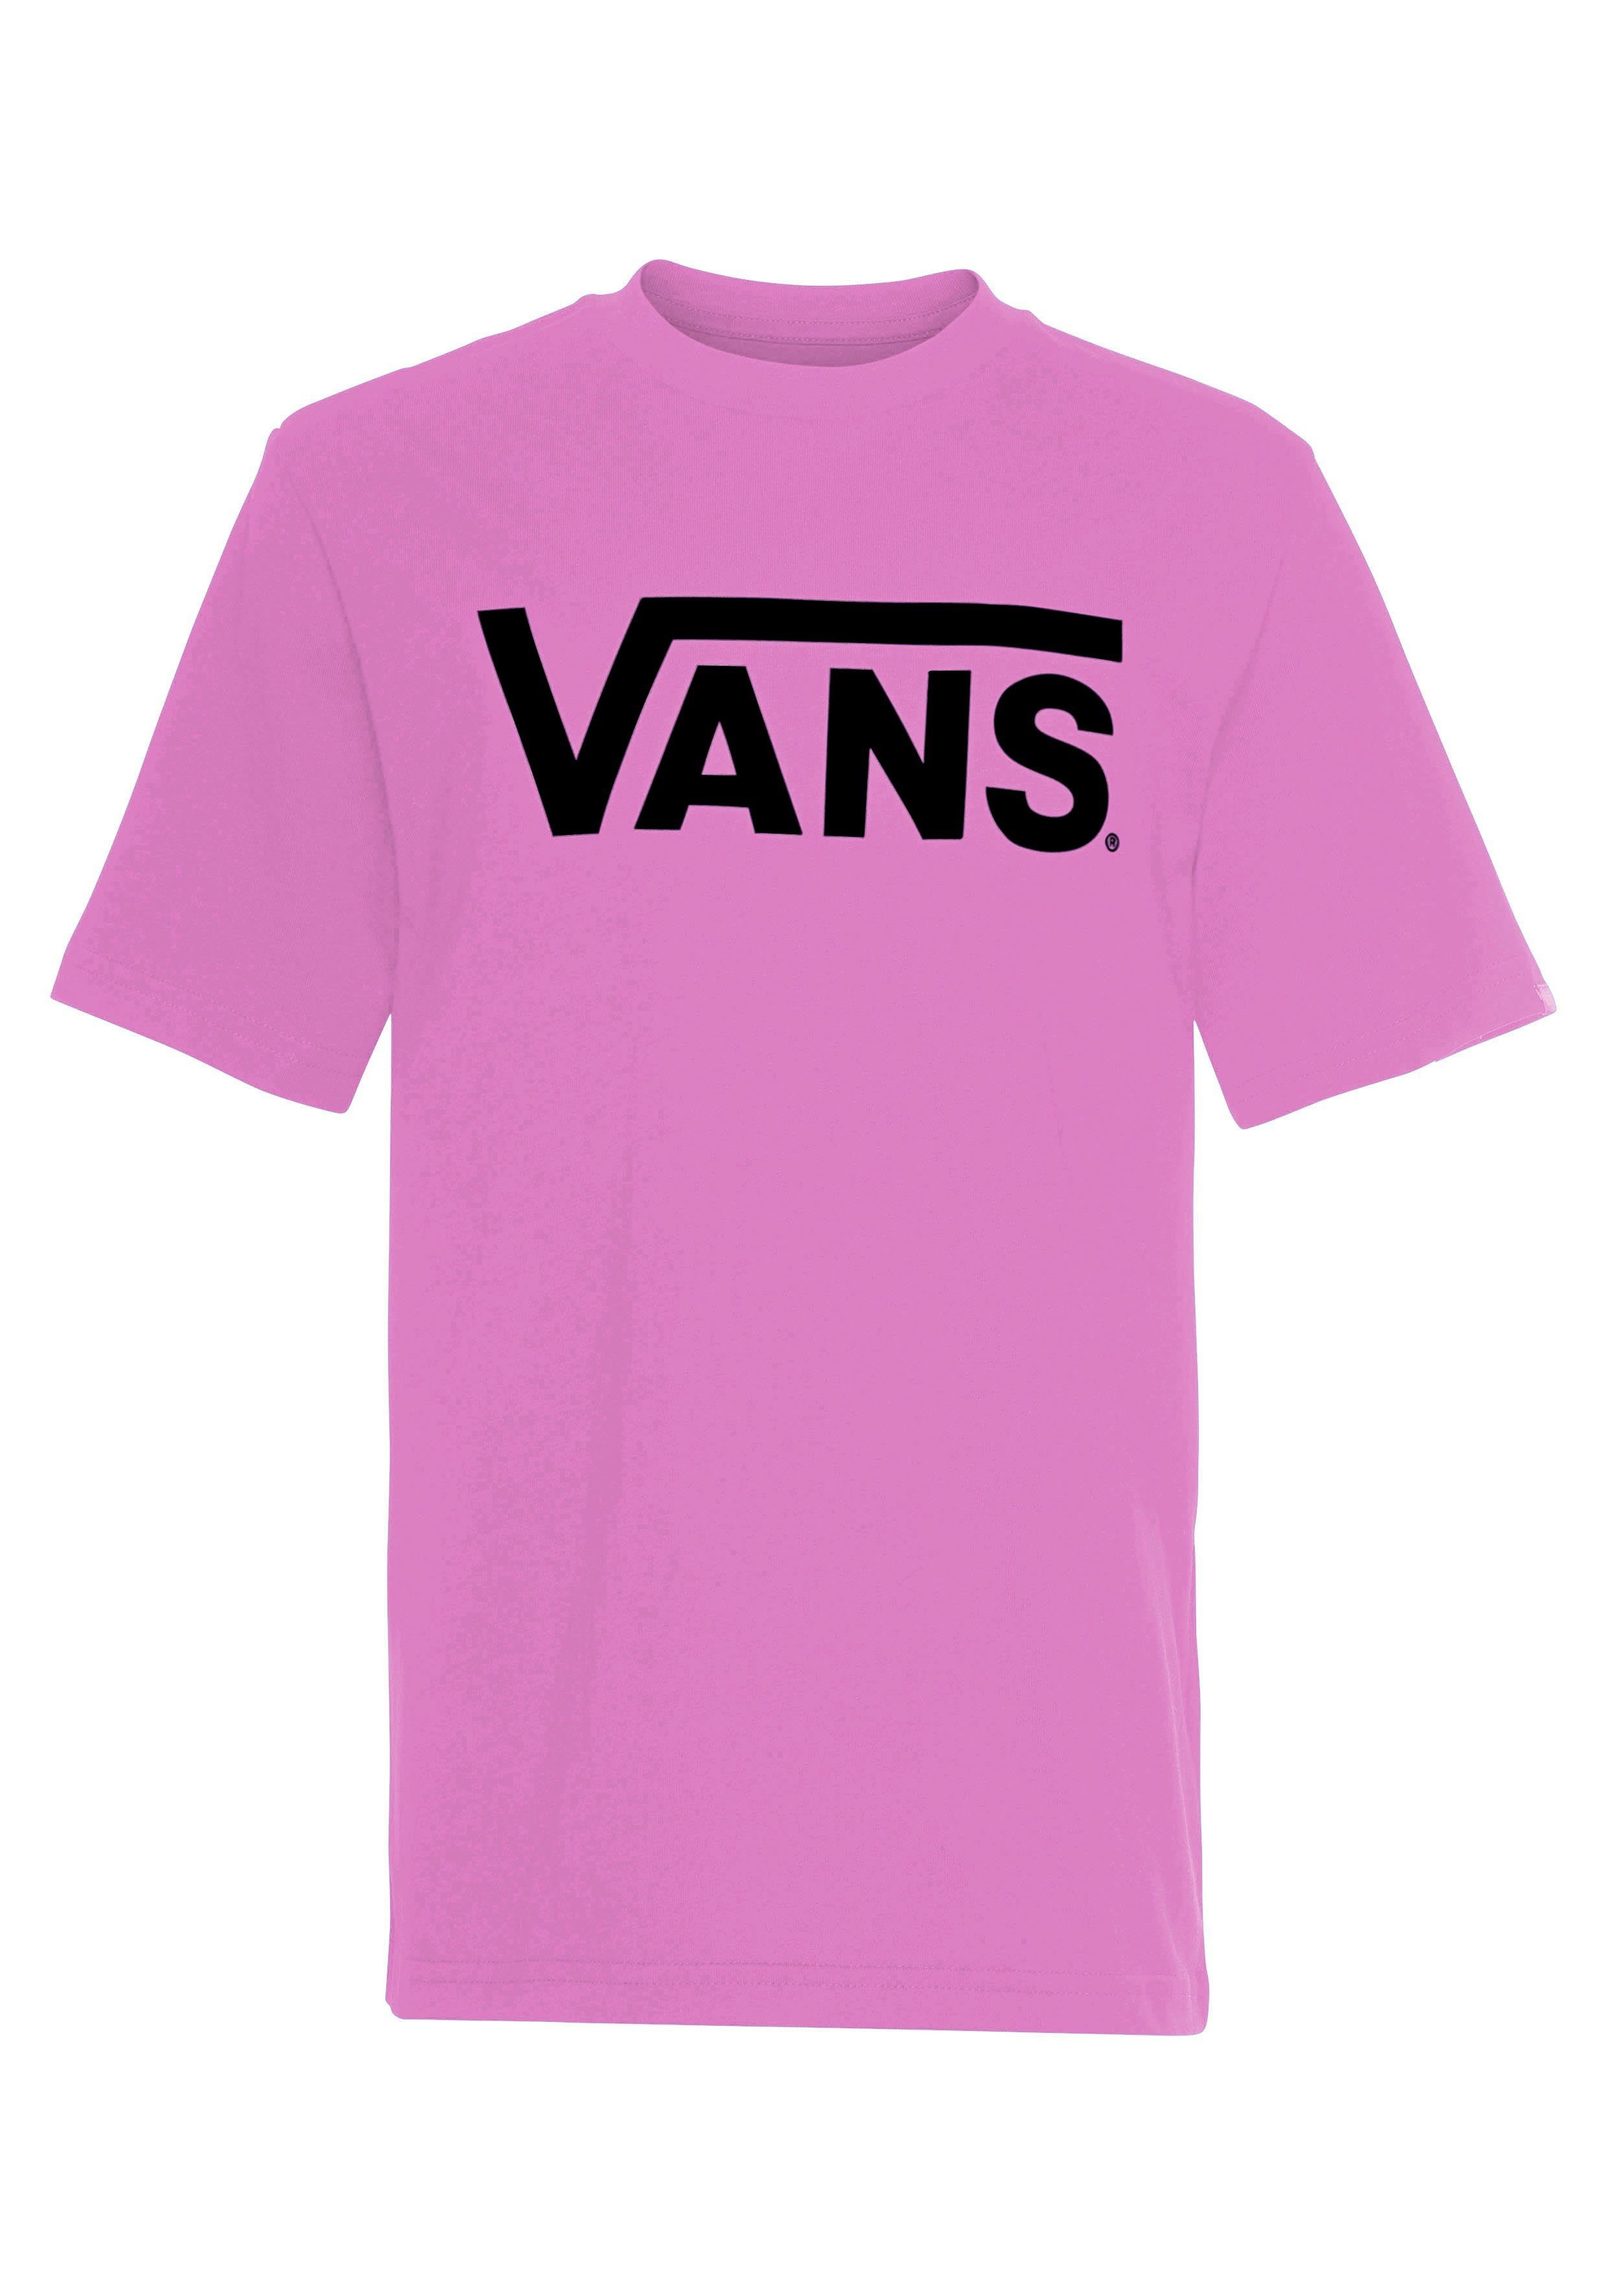 FLYING cyclamen V Vans GIRLS GR CREW T-Shirt